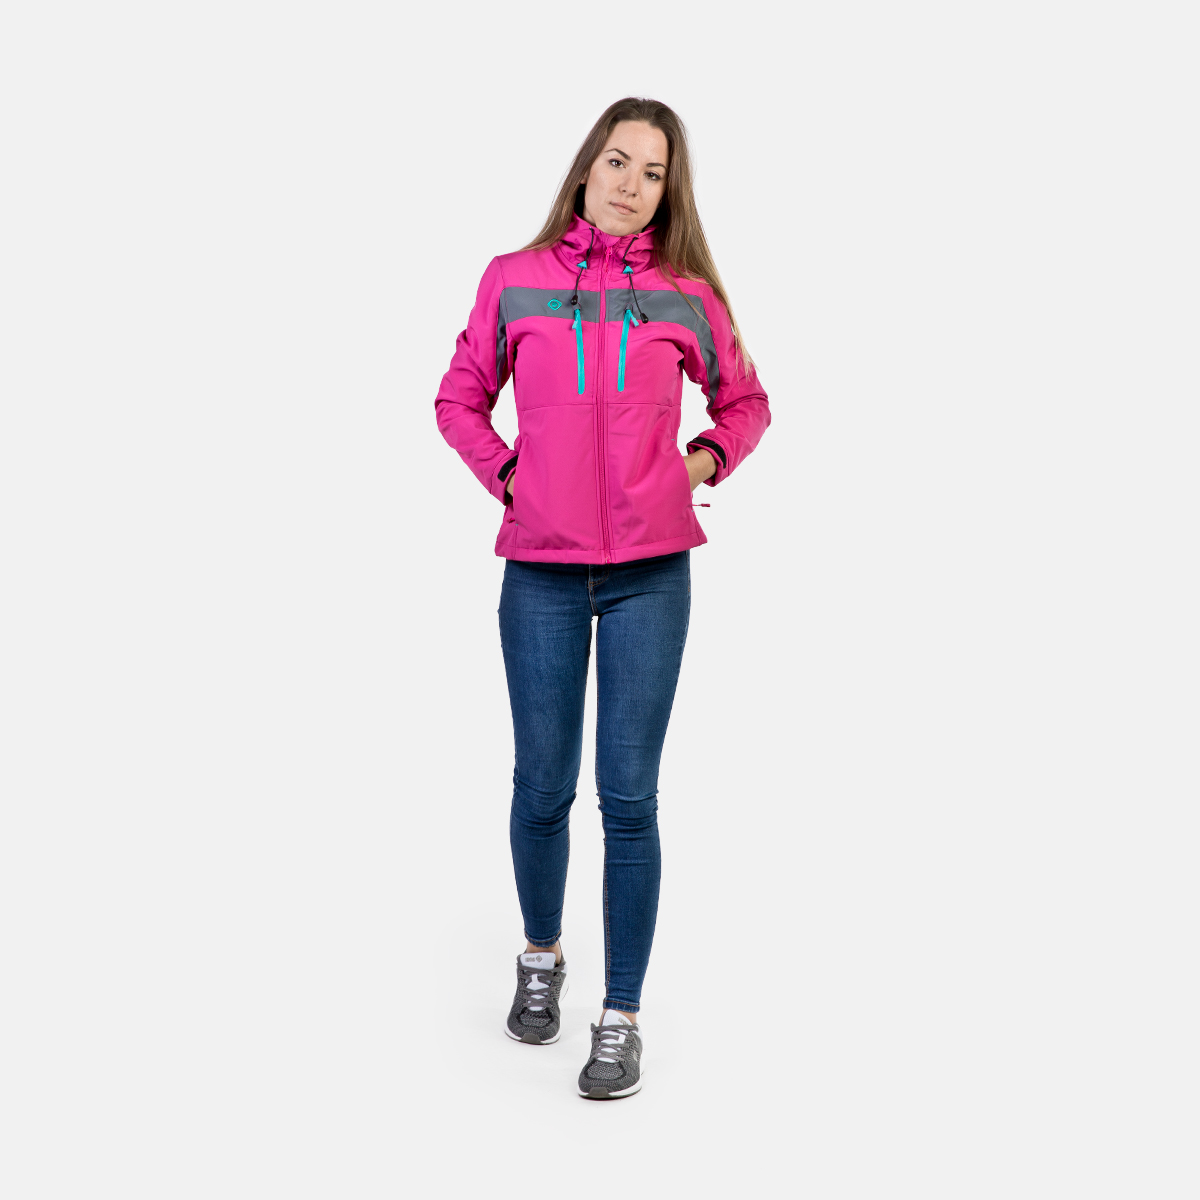 IZAS Izas TAHOE - Chaqueta mujer pink fluor - Private Sport Shop